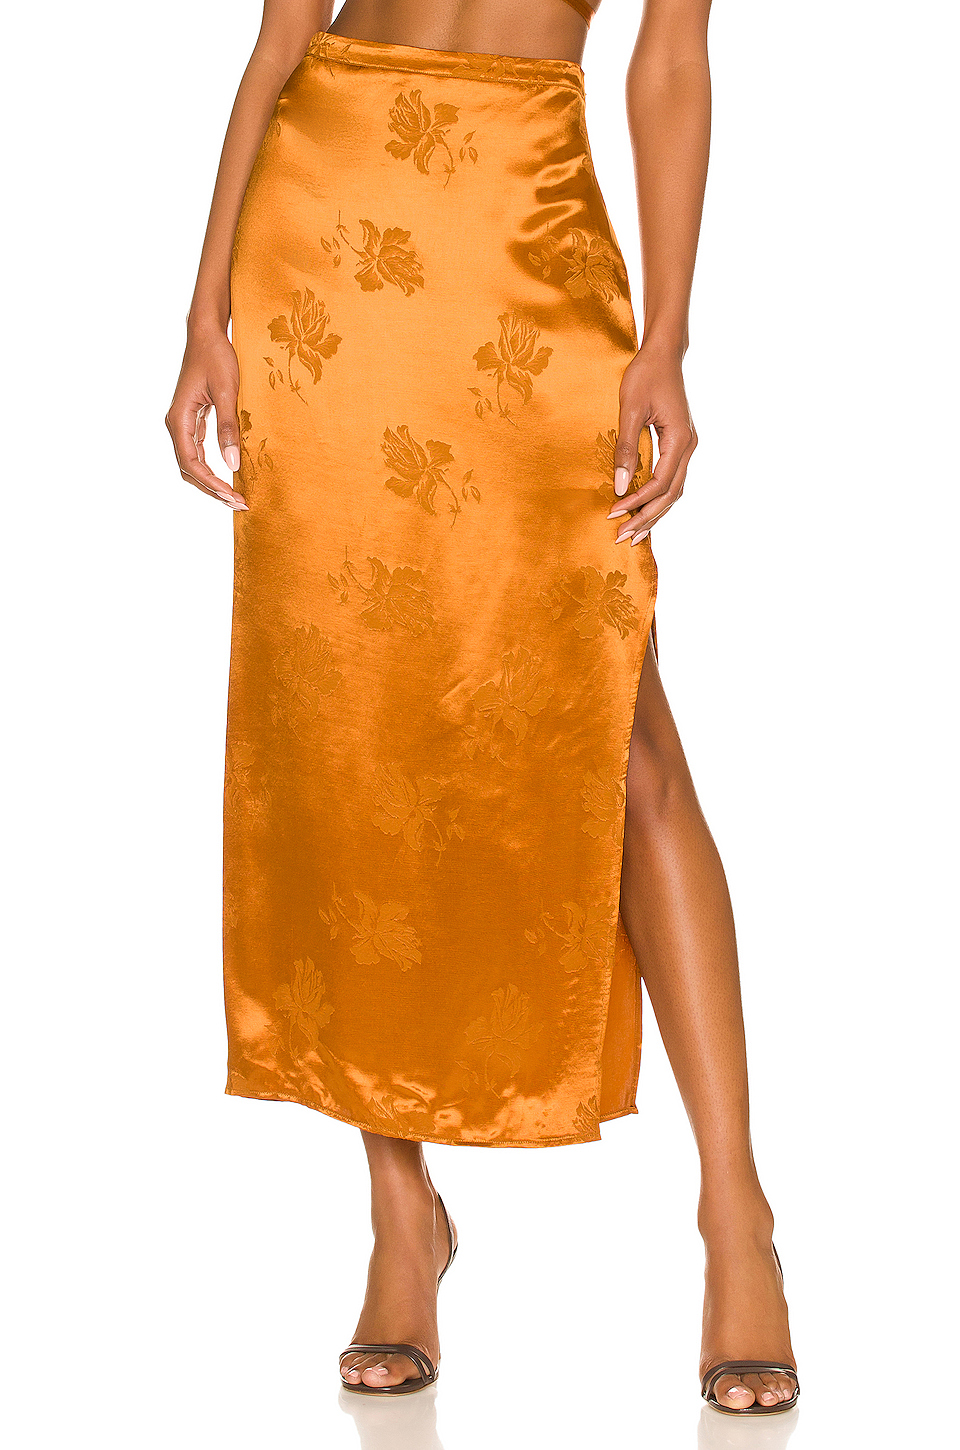 x REVOLVE Adonia Skirt in Bronze展示图